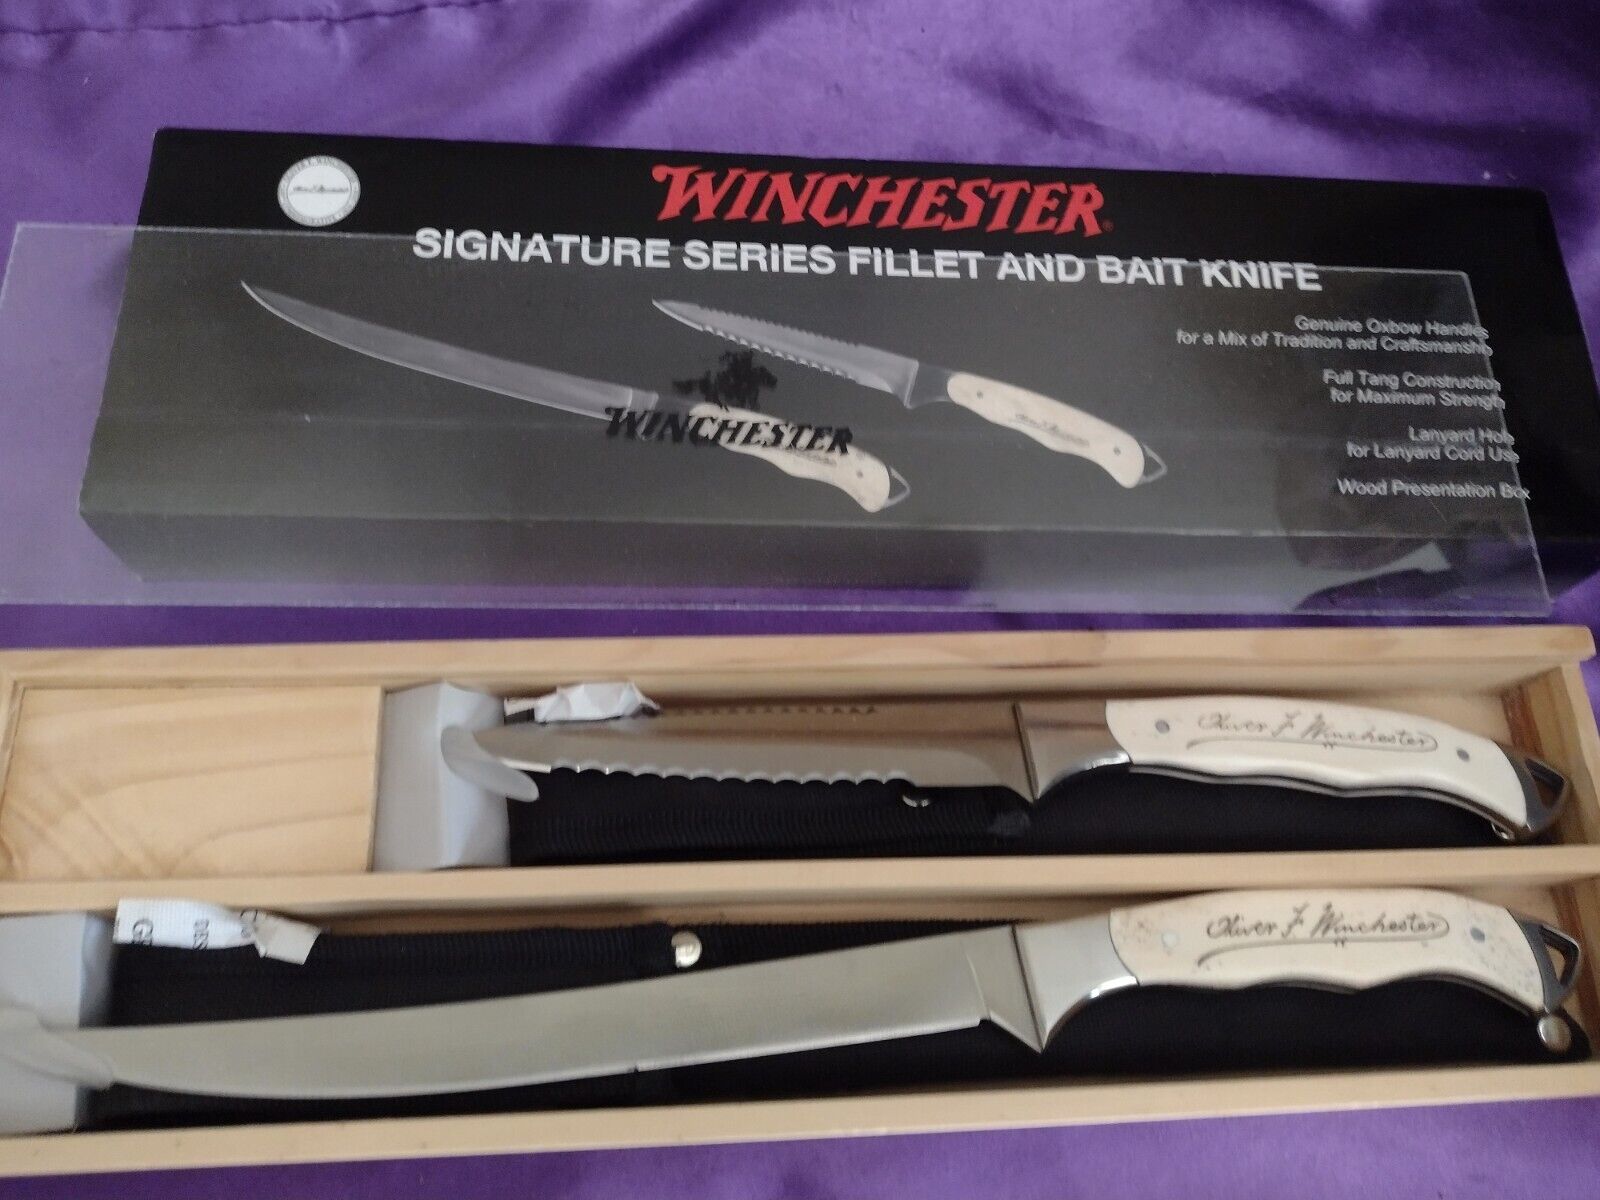 New Oliver F. Winchester Signature Handle Bone Fillet & Bait Fishing Knife Set